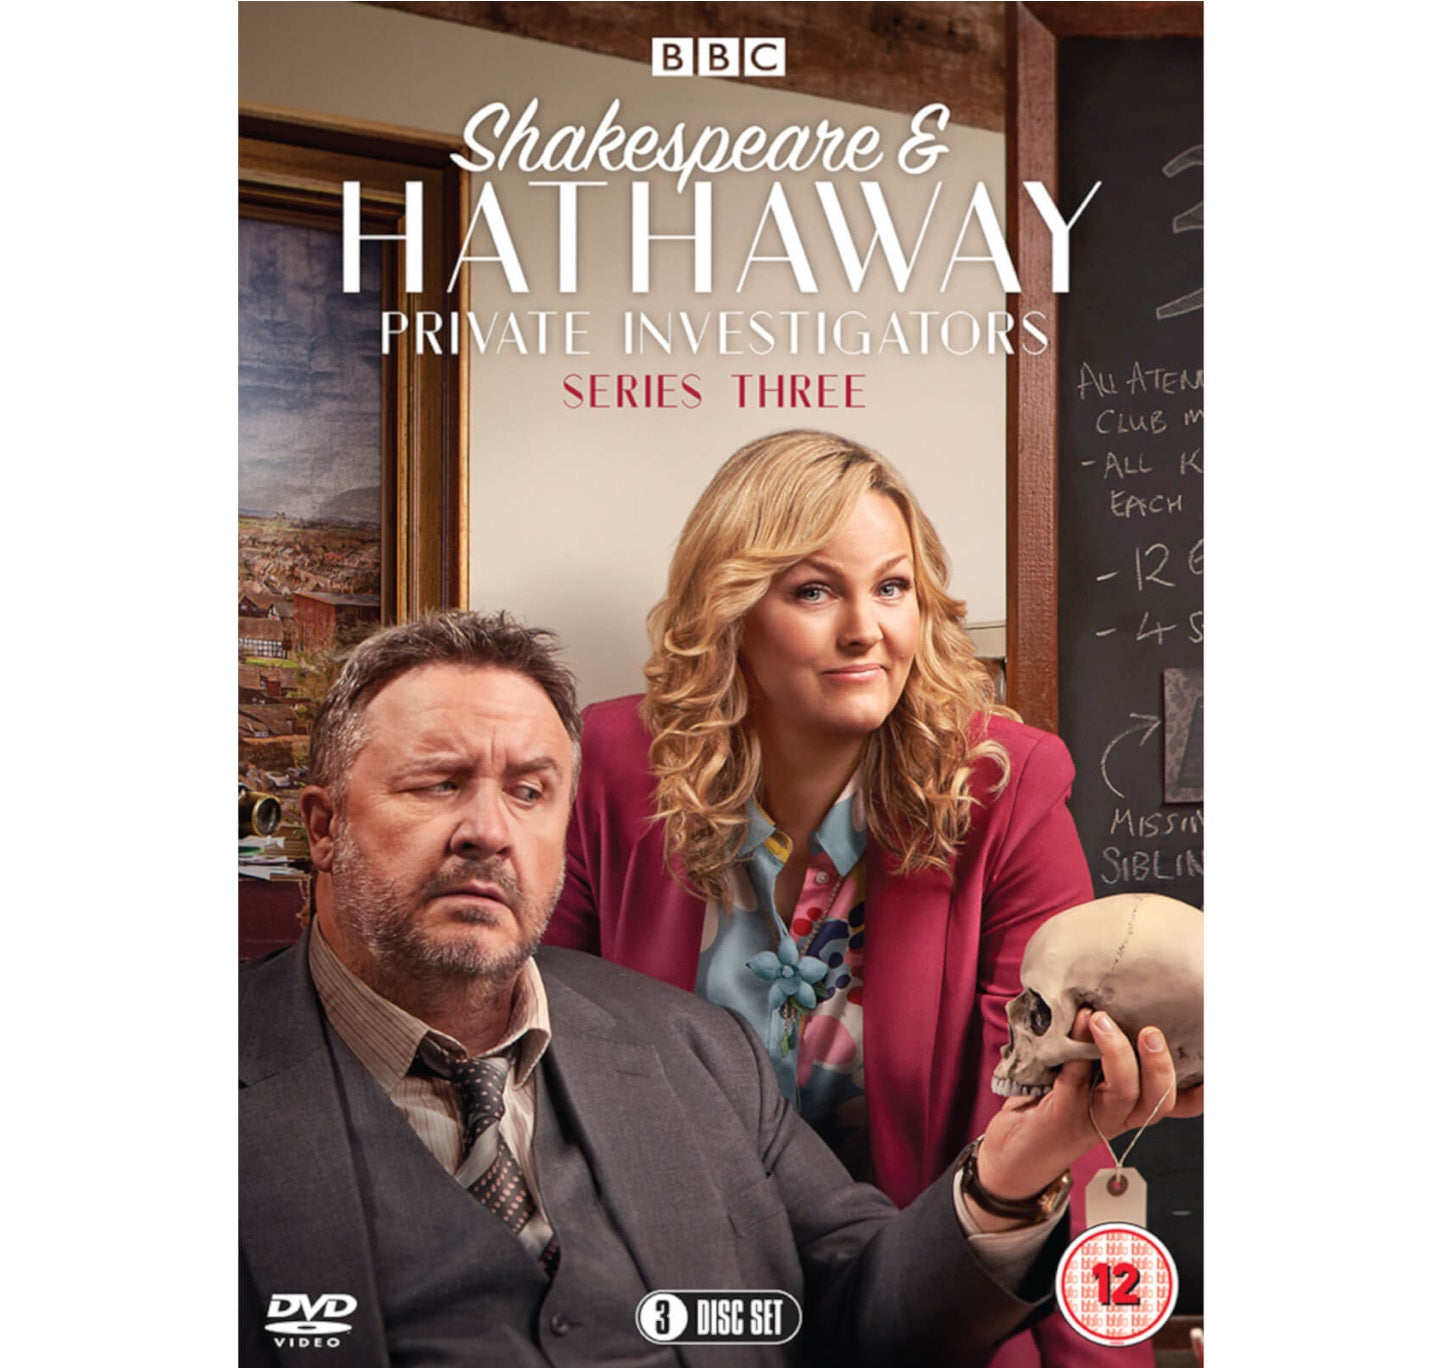 Shakespeare & Hathaway - Private Investigators: Series 3 DVD (2020)